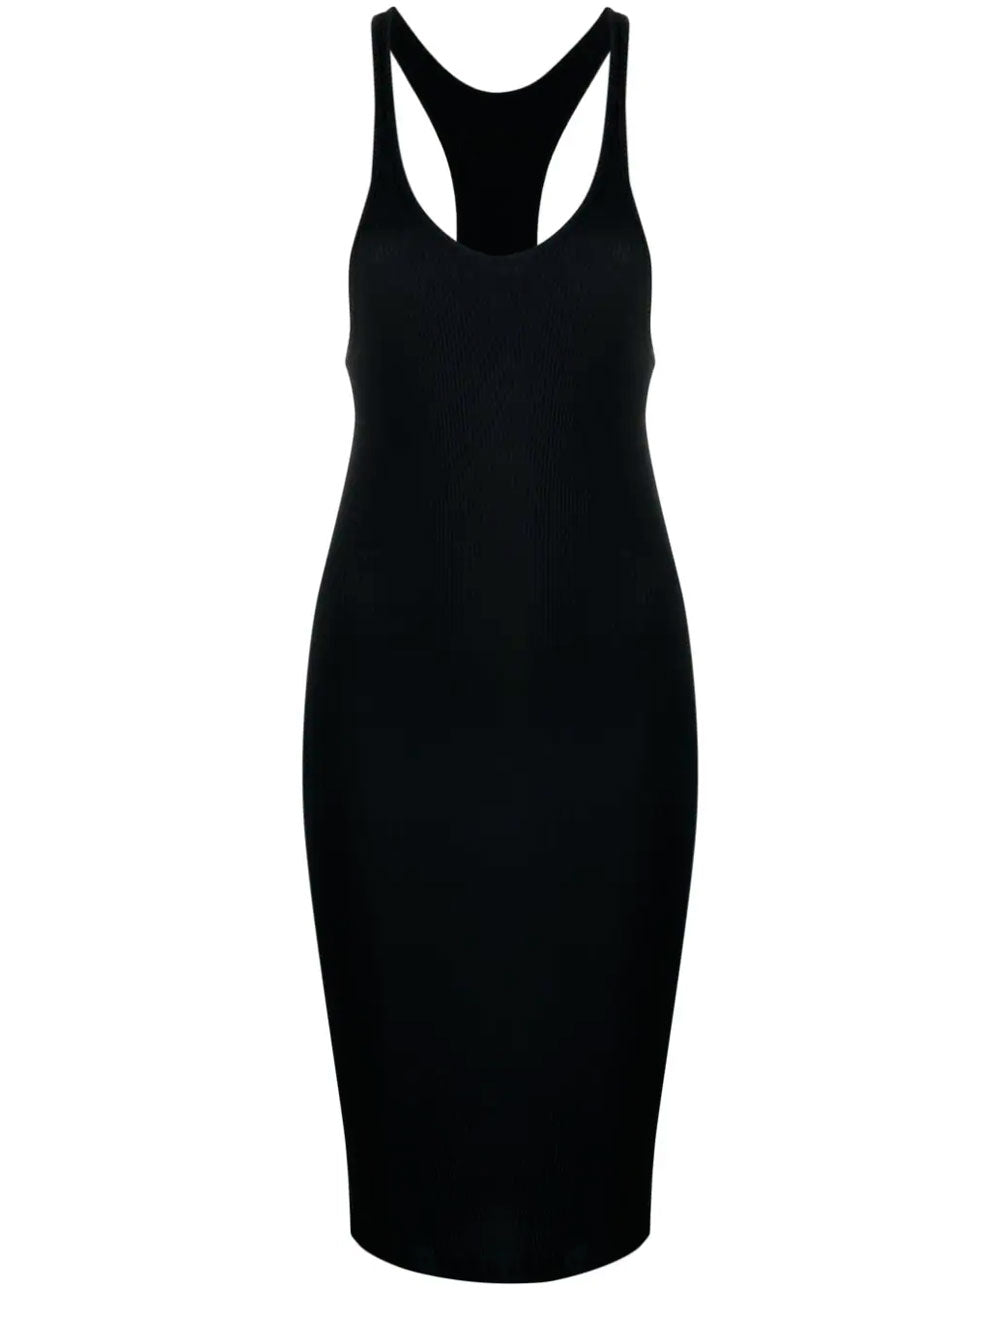 Isabel Marant black dress